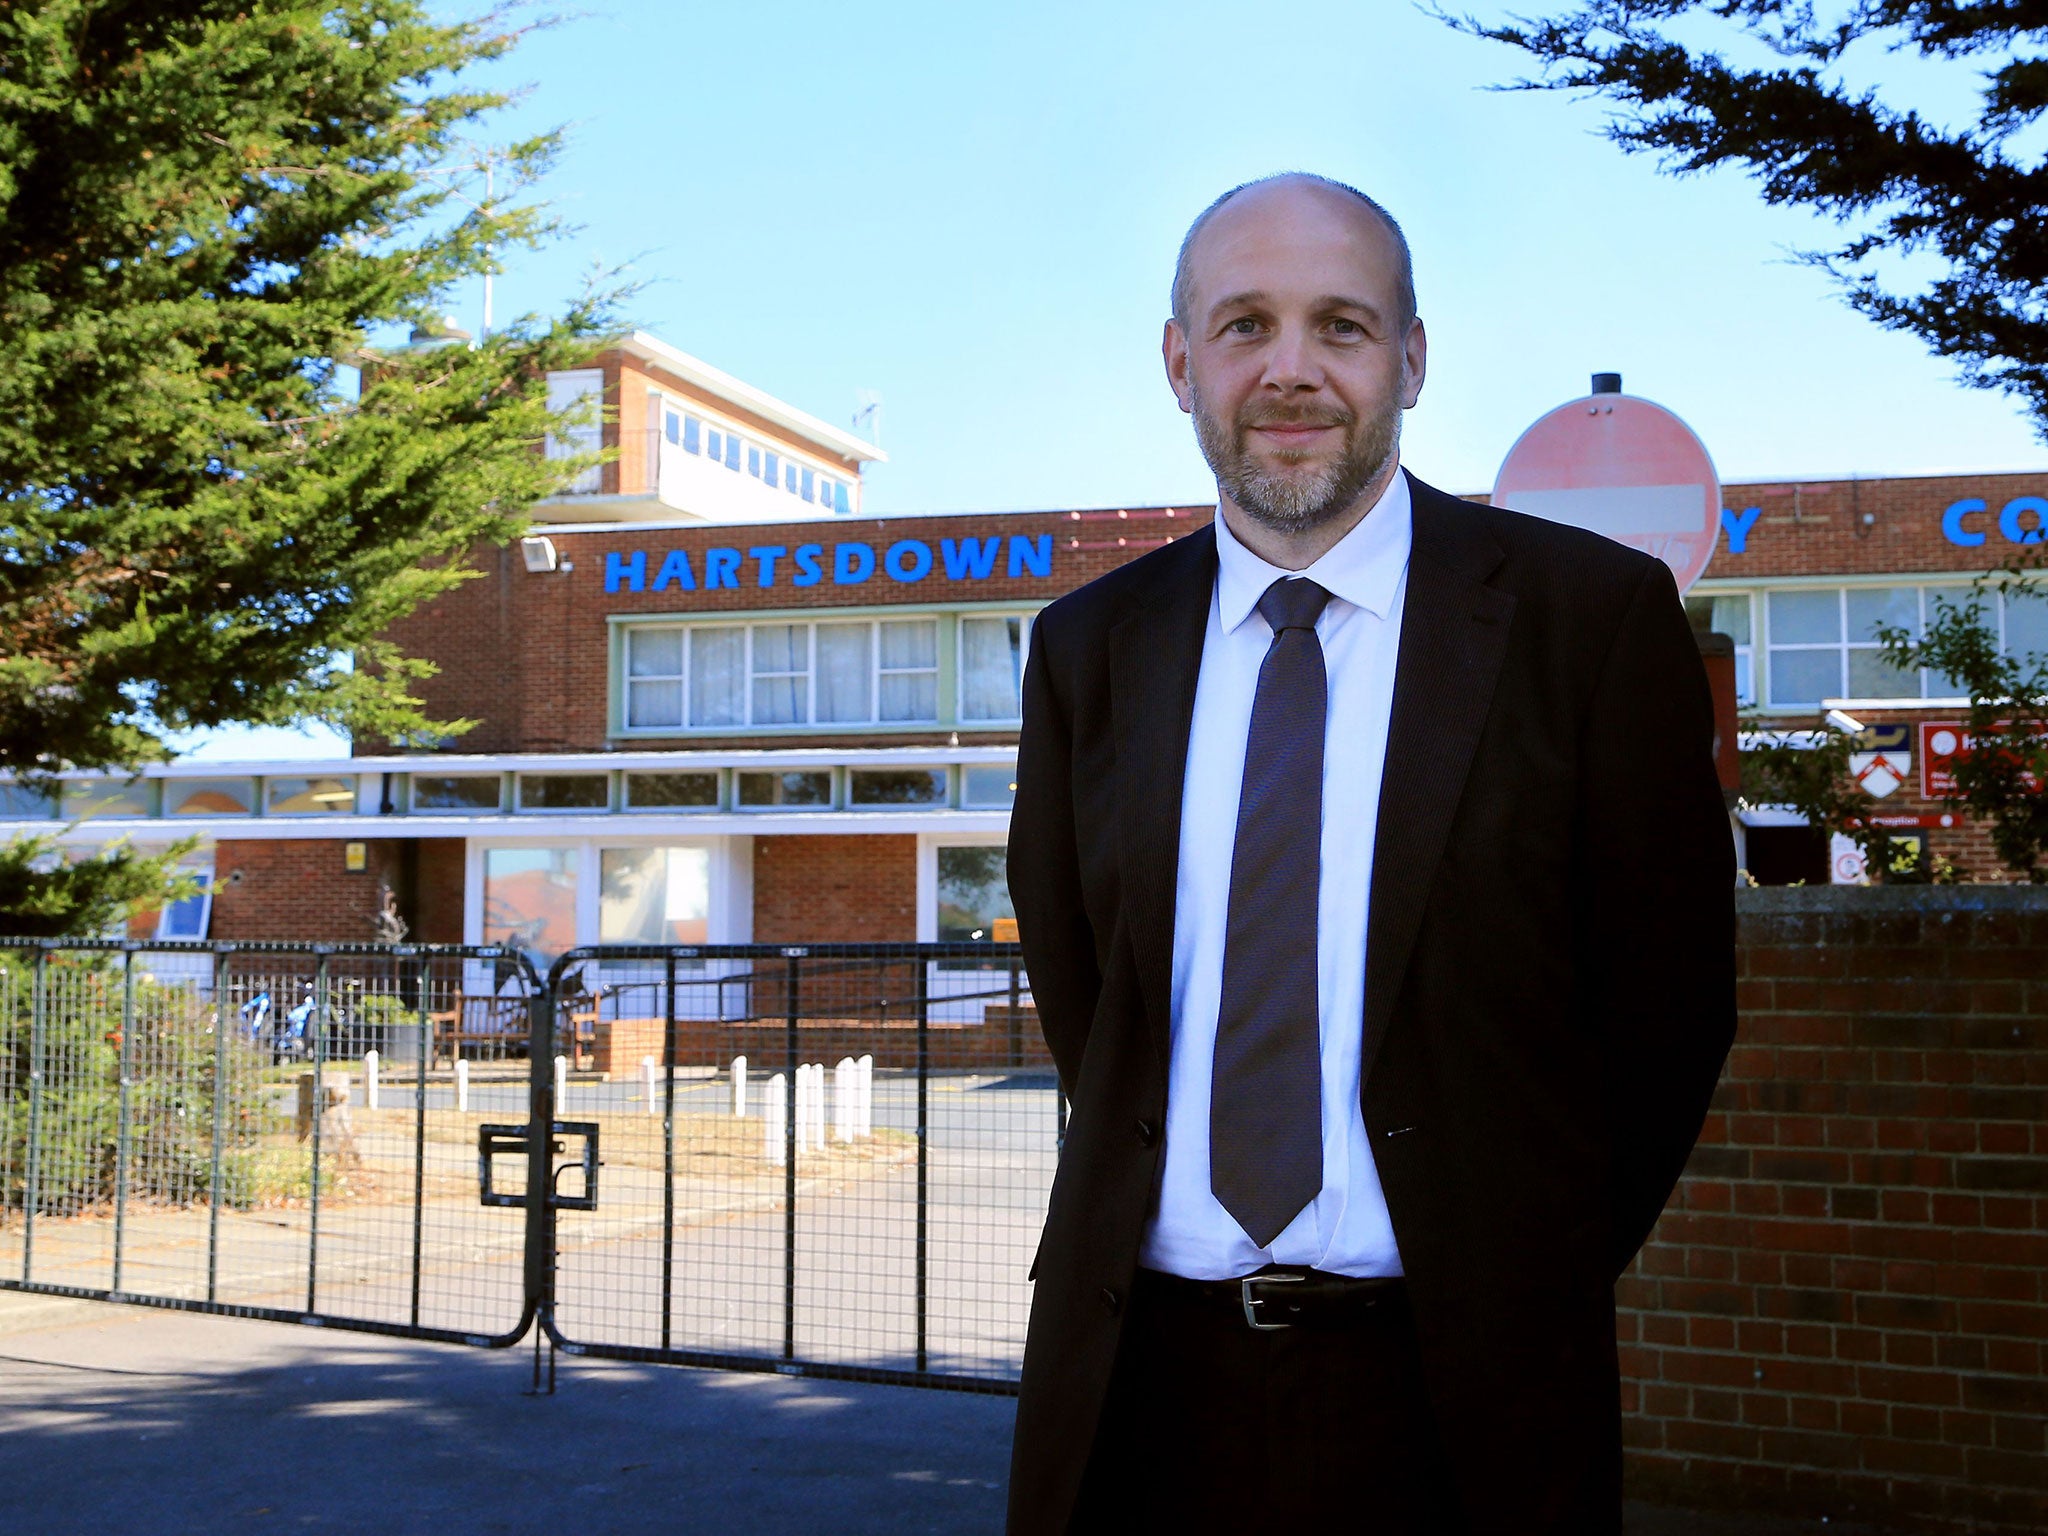 Headteacher Matthew Tate has been sending home pupils in the incorrect uniform from Hatsdown Academy